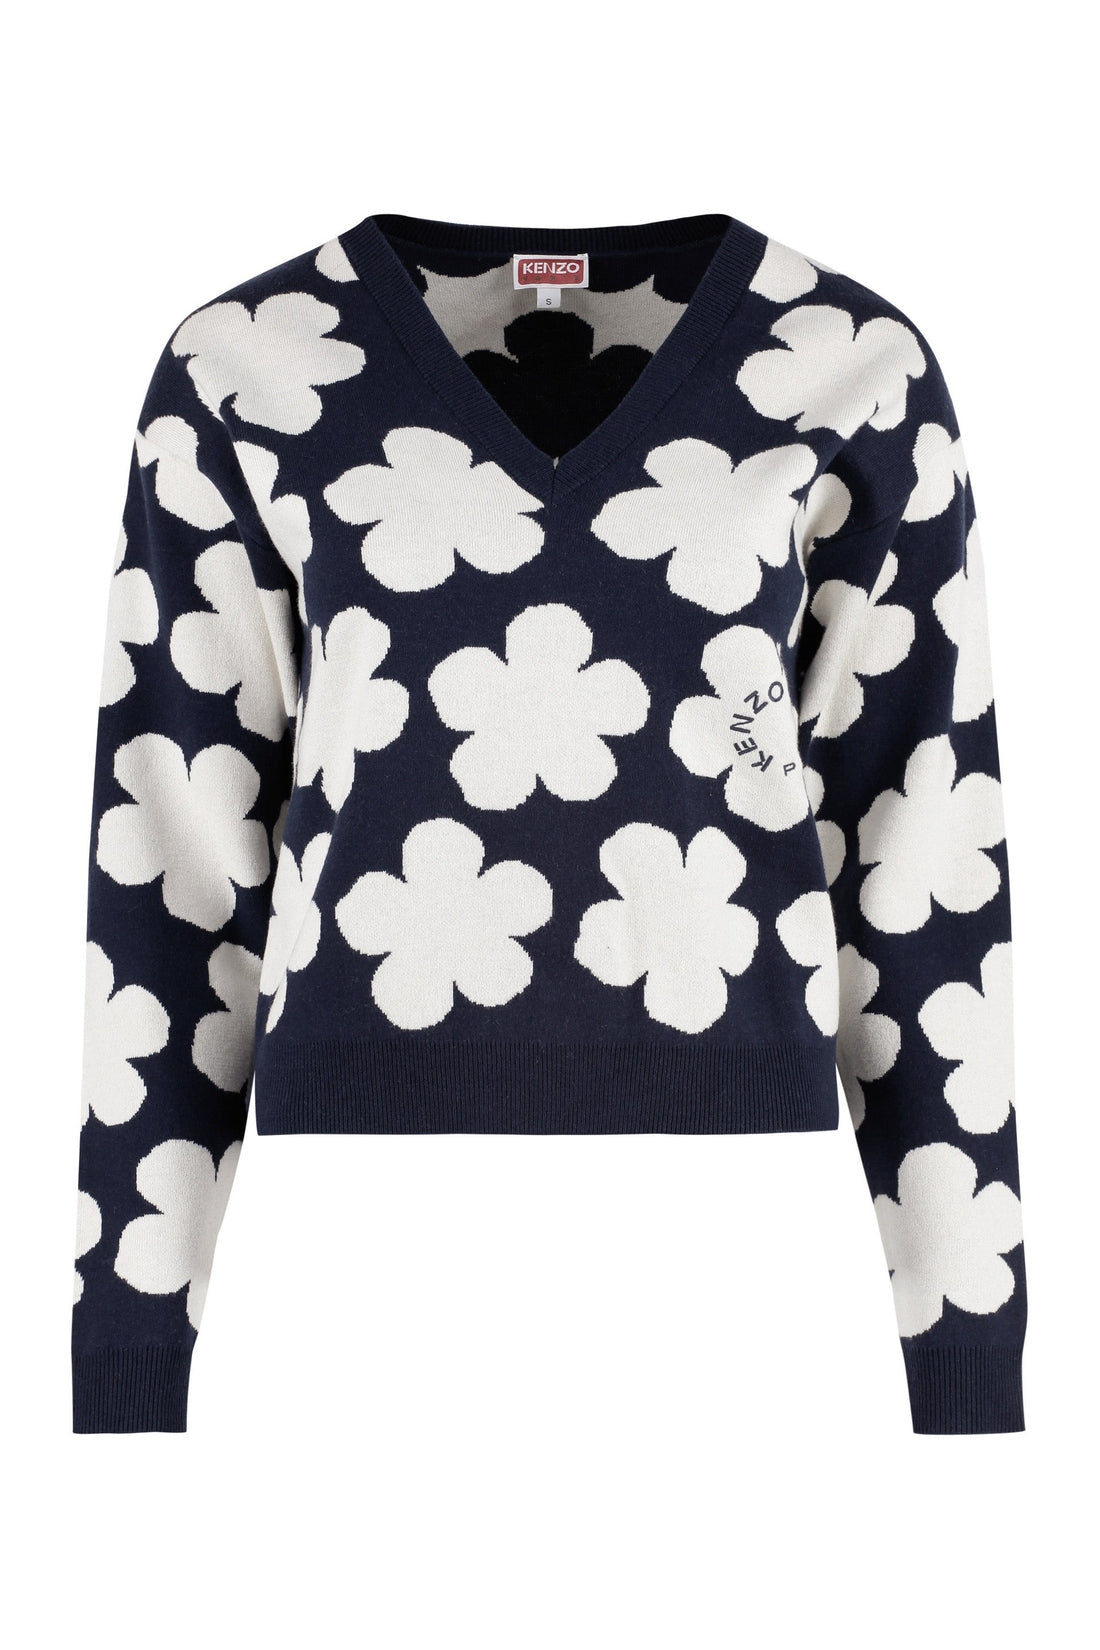 Kenzo-OUTLET-SALE-Wool-cotton blend jacquard sweater-ARCHIVIST